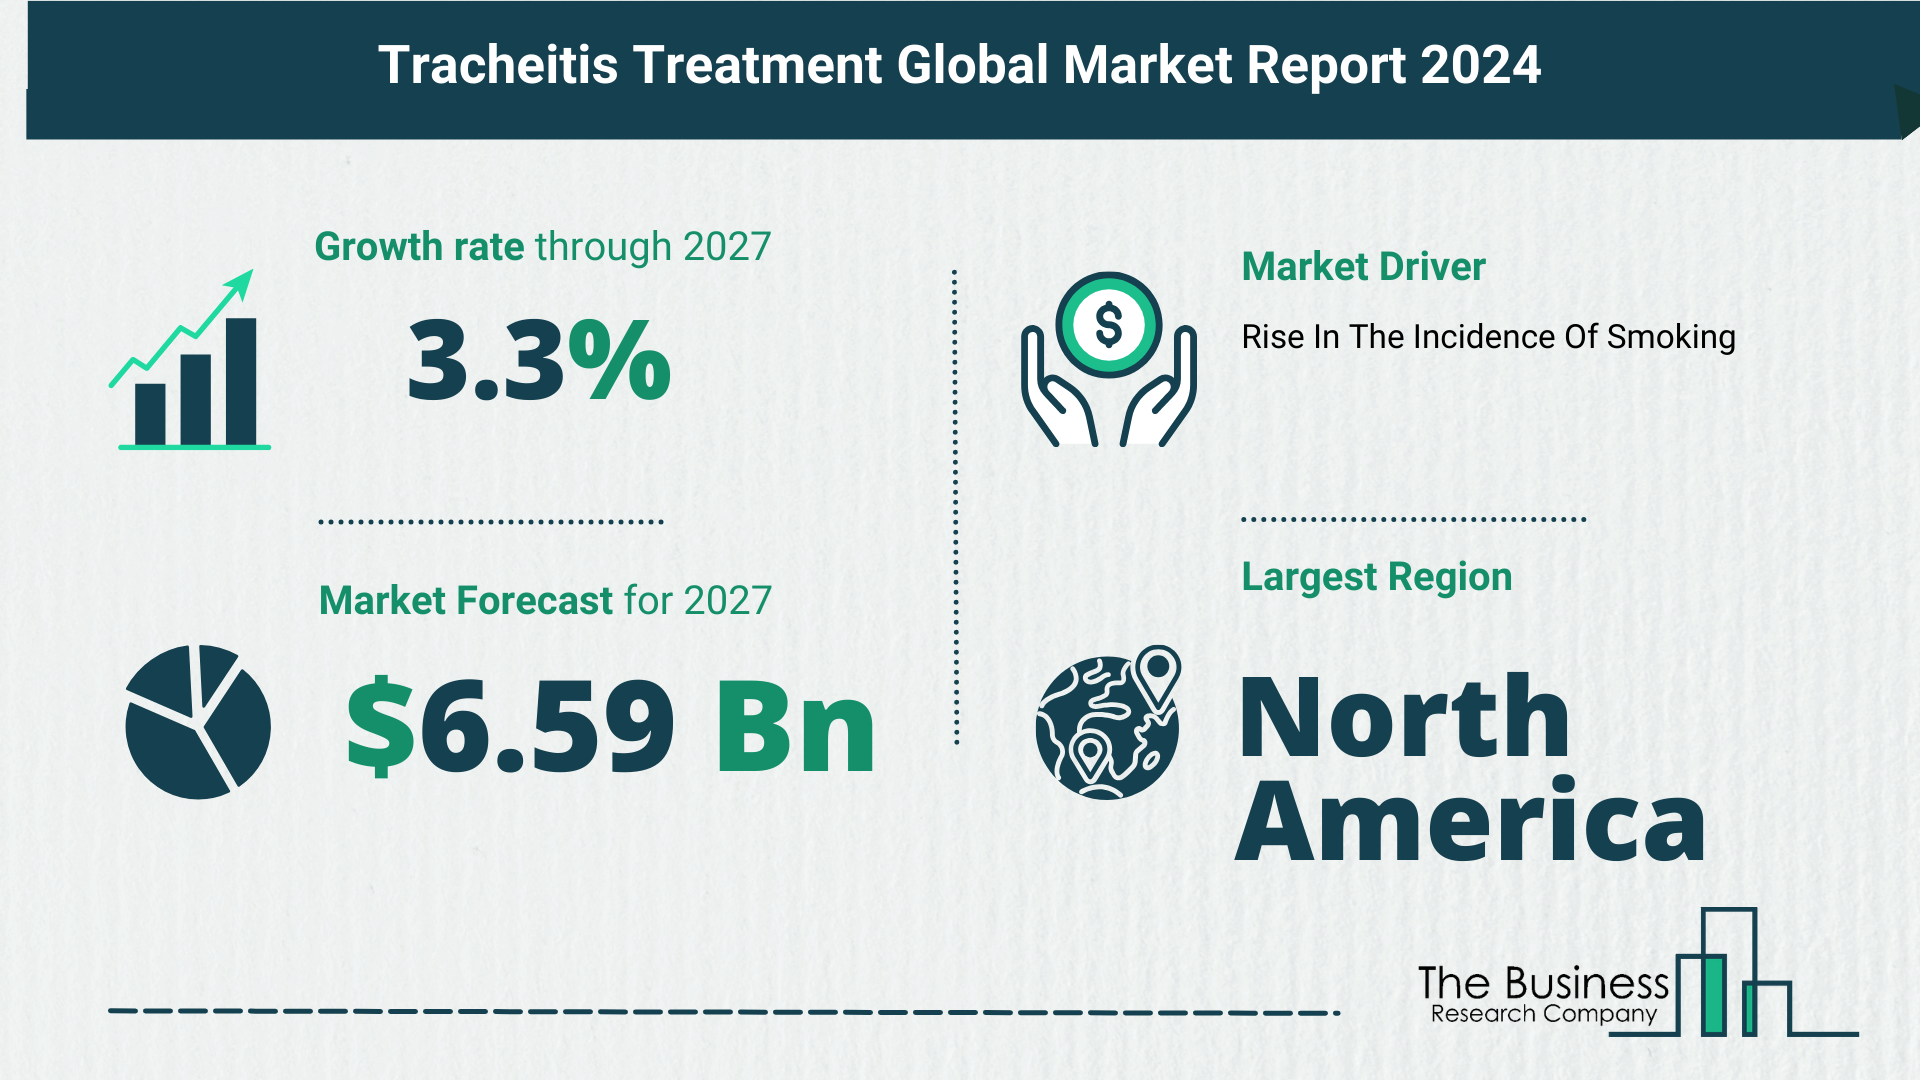 Global Tracheitis Treatment Market